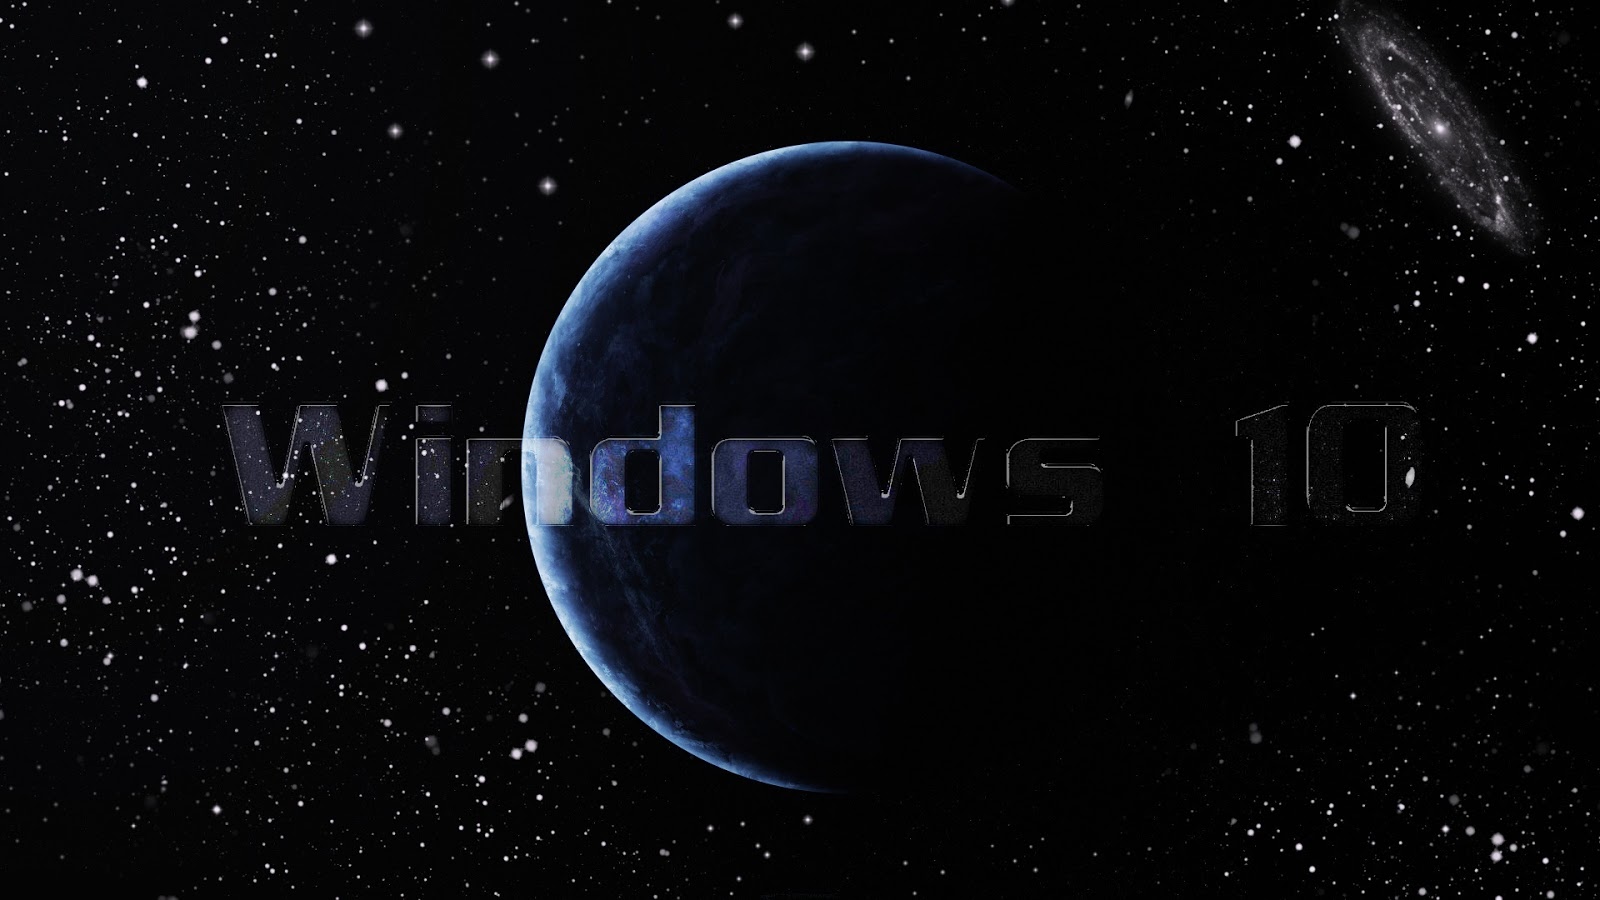 Windows 10 as Desktop Background